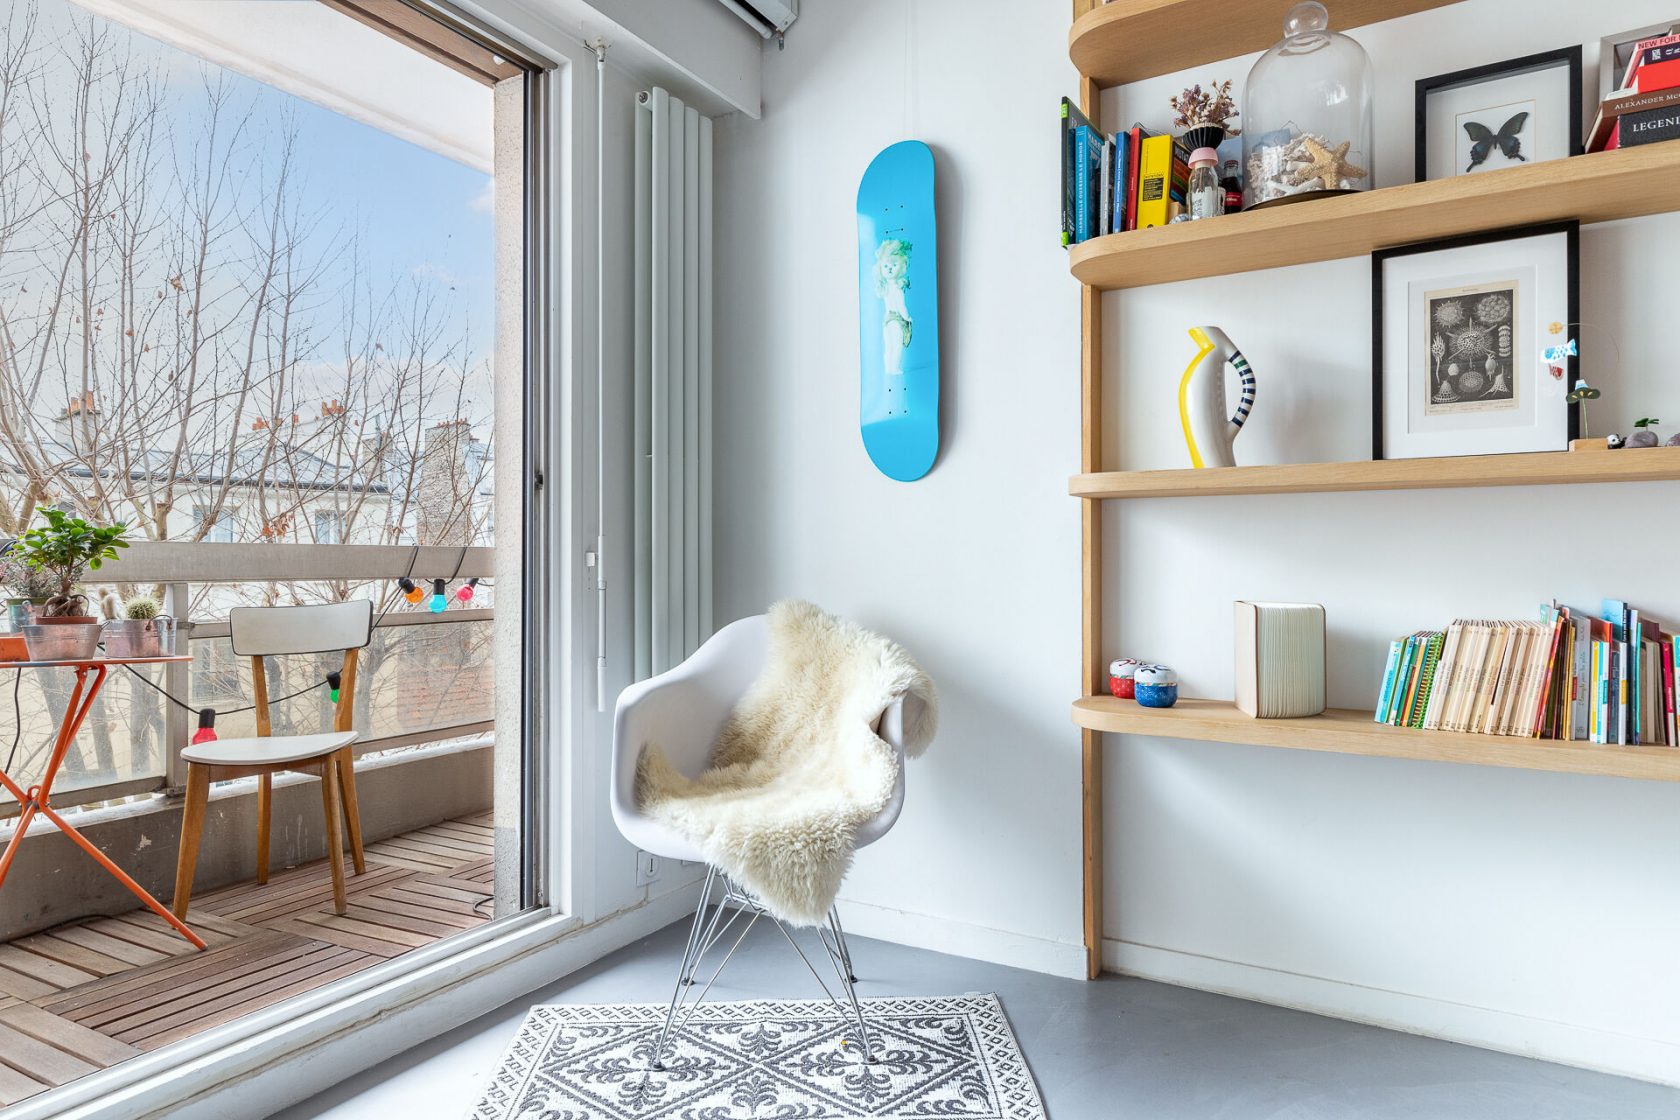 Architect’s apartment with balcony